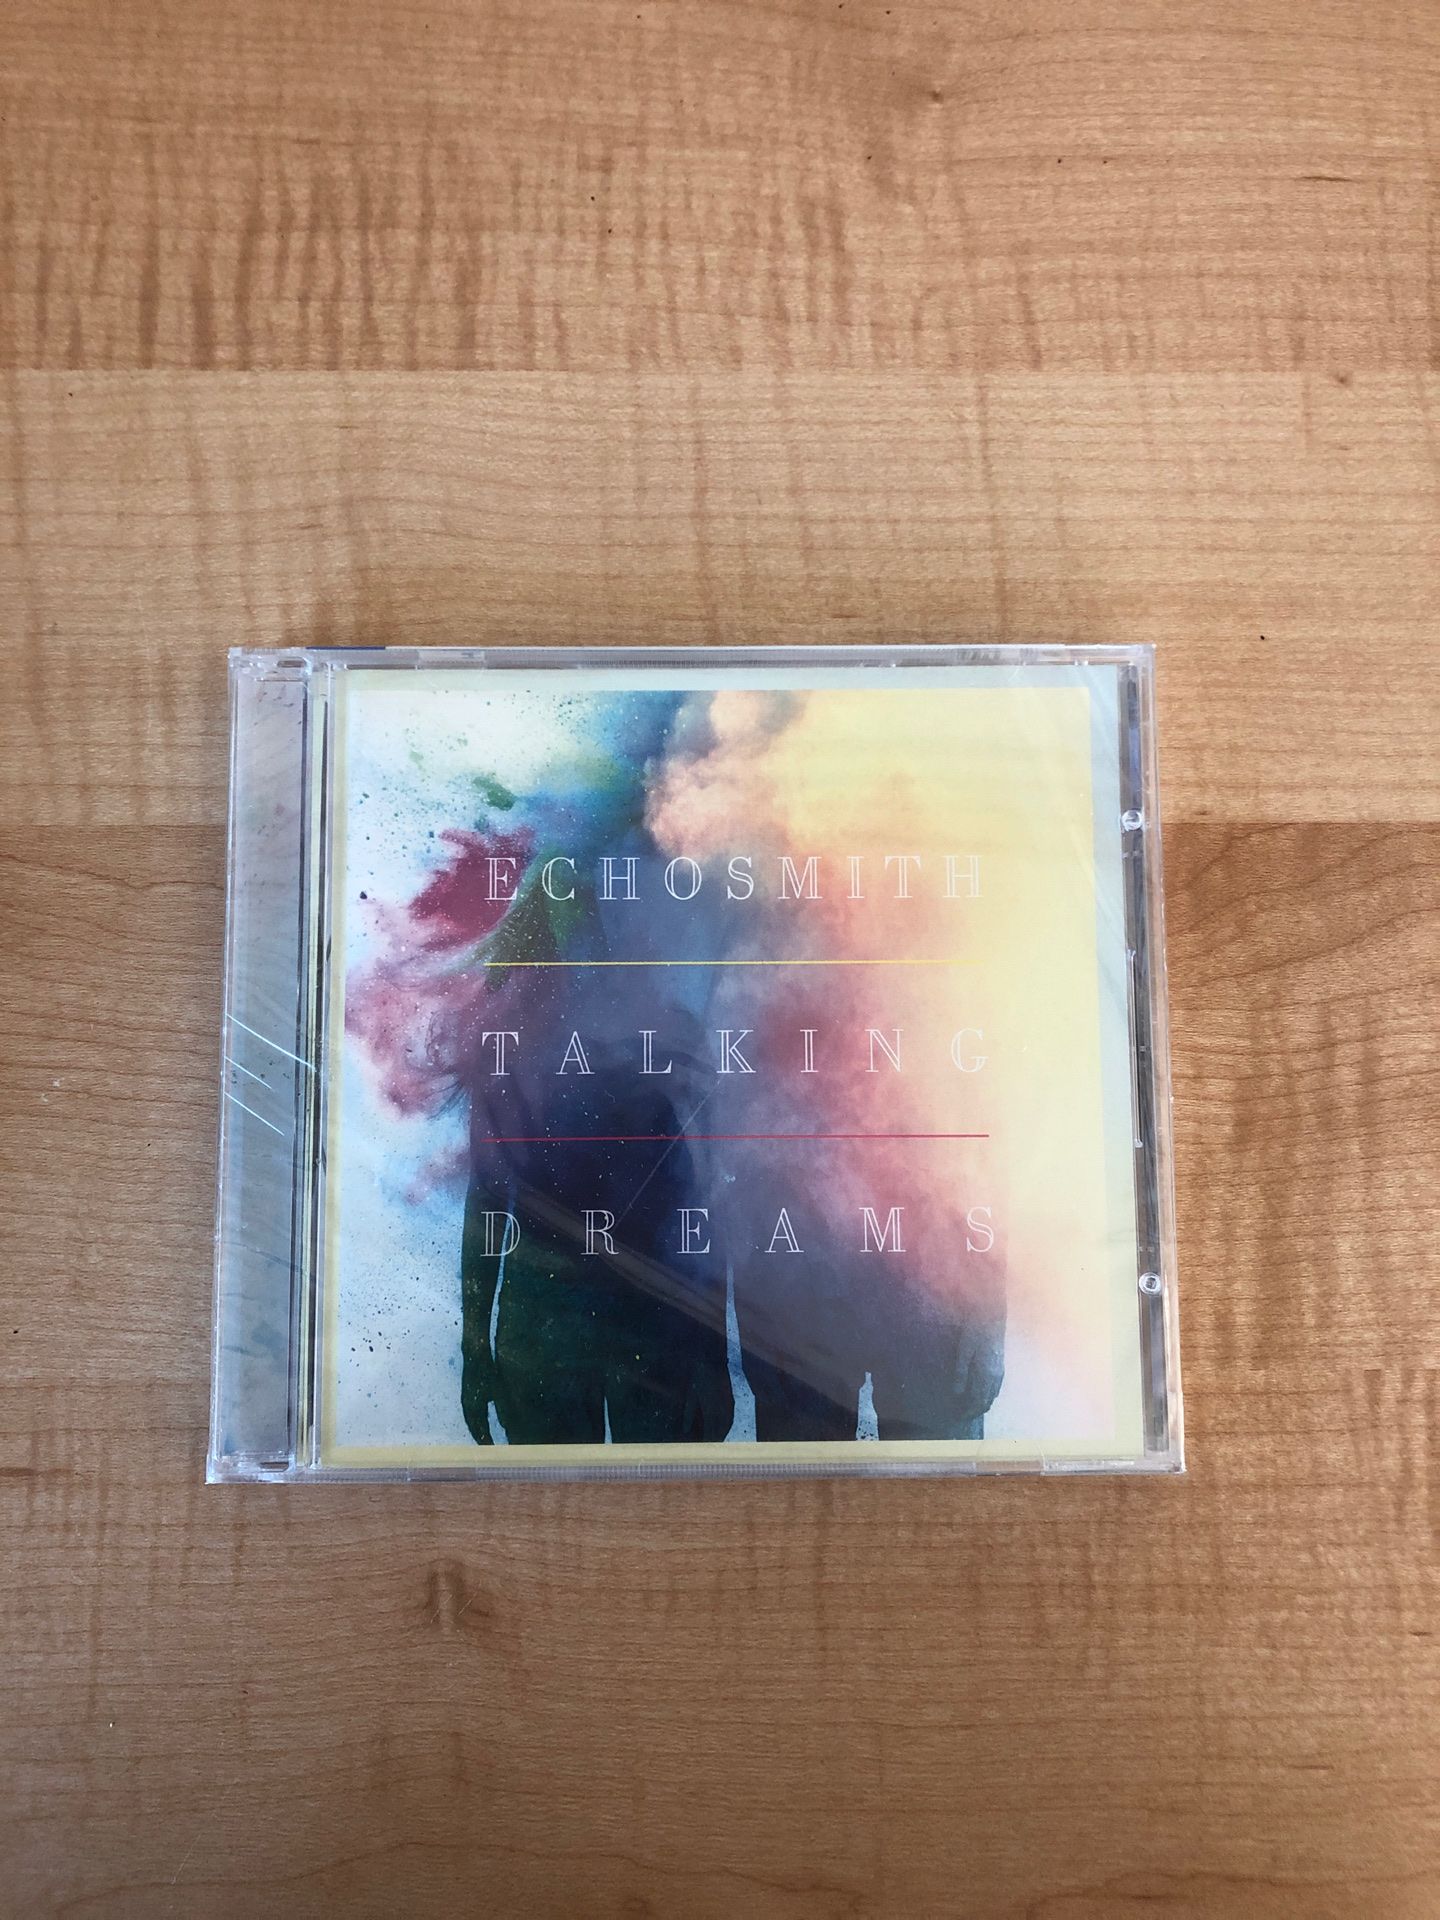 Echosmith - Talking Dreams (CD) - Like New Condition